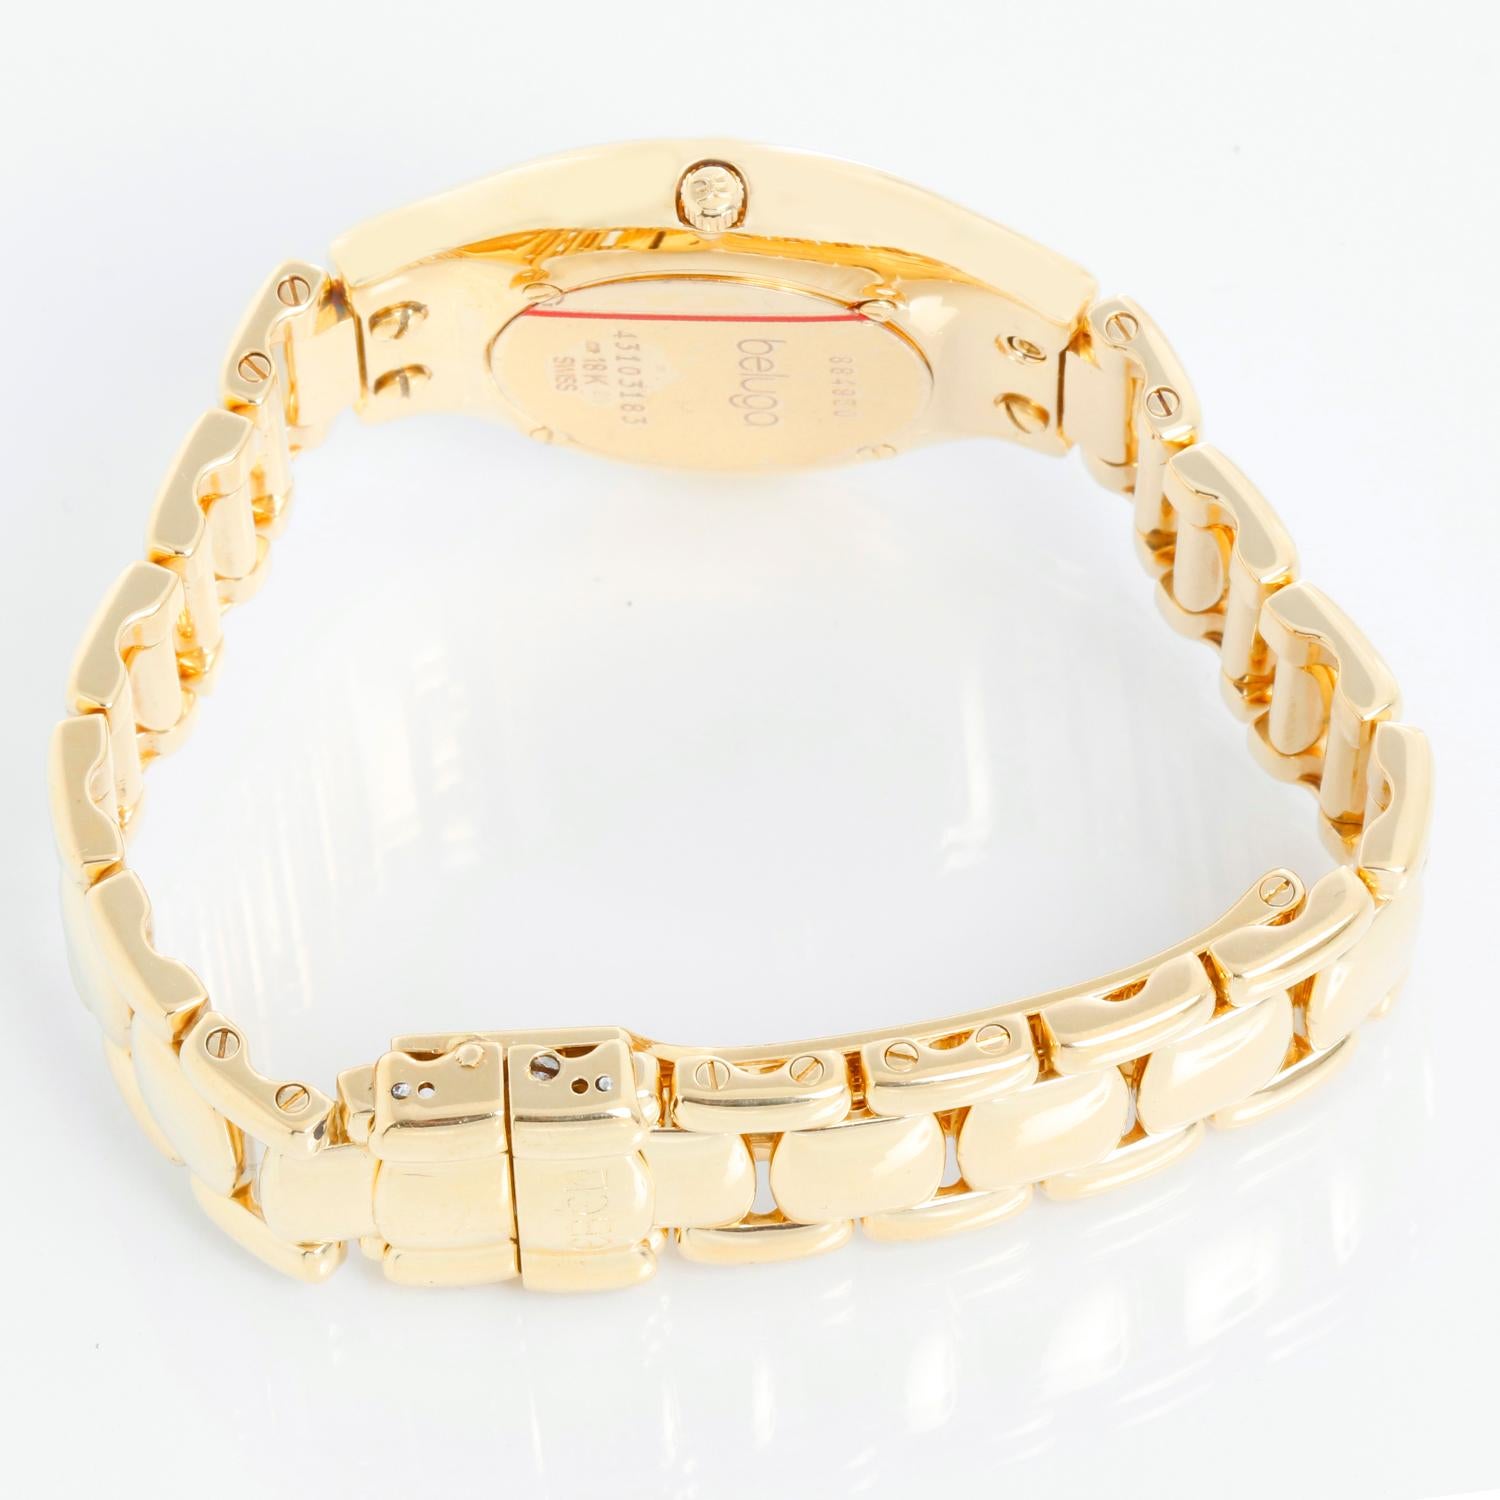 Ebel Beluga 18k Yellow Gold Men's/Ladies 32mm Midsize Quartz Watch 884960 For Sale 1